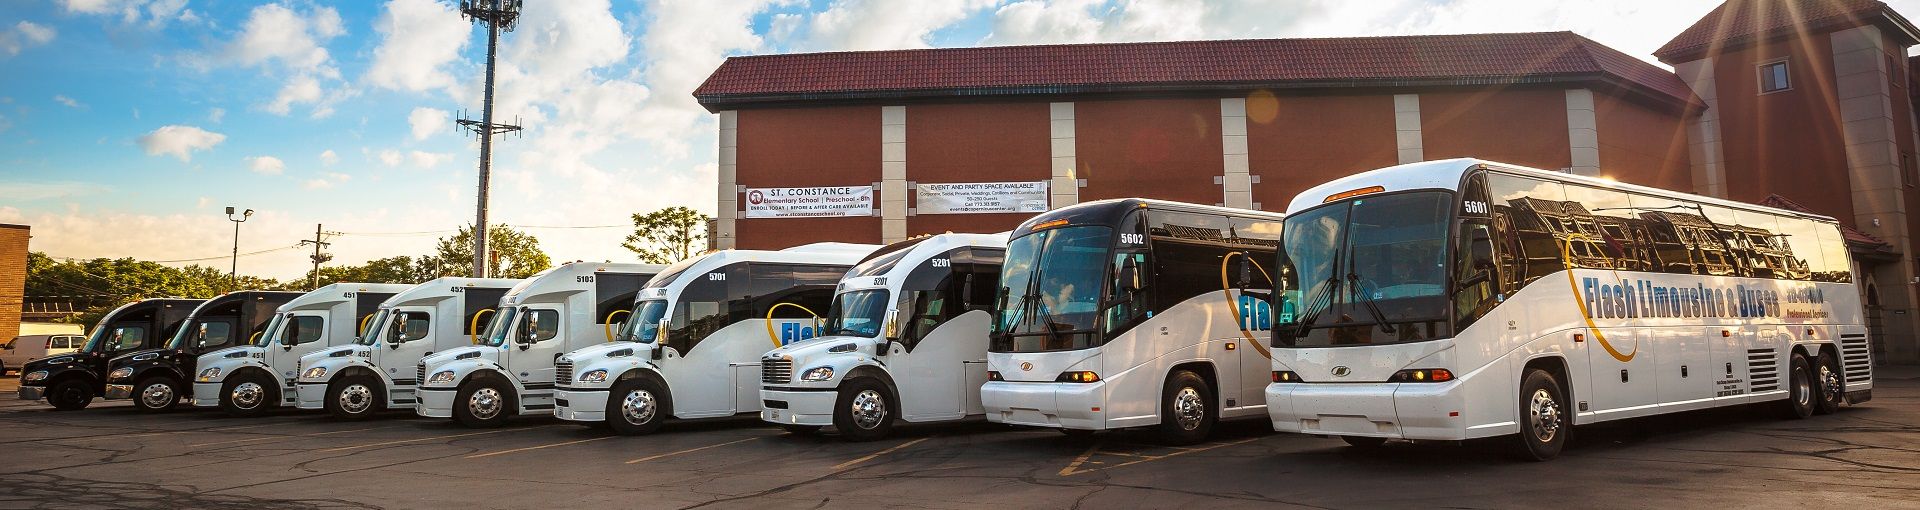 Coach Bus Transportation Chicago Motor Coach Bus and Shuttle Bus Transportation